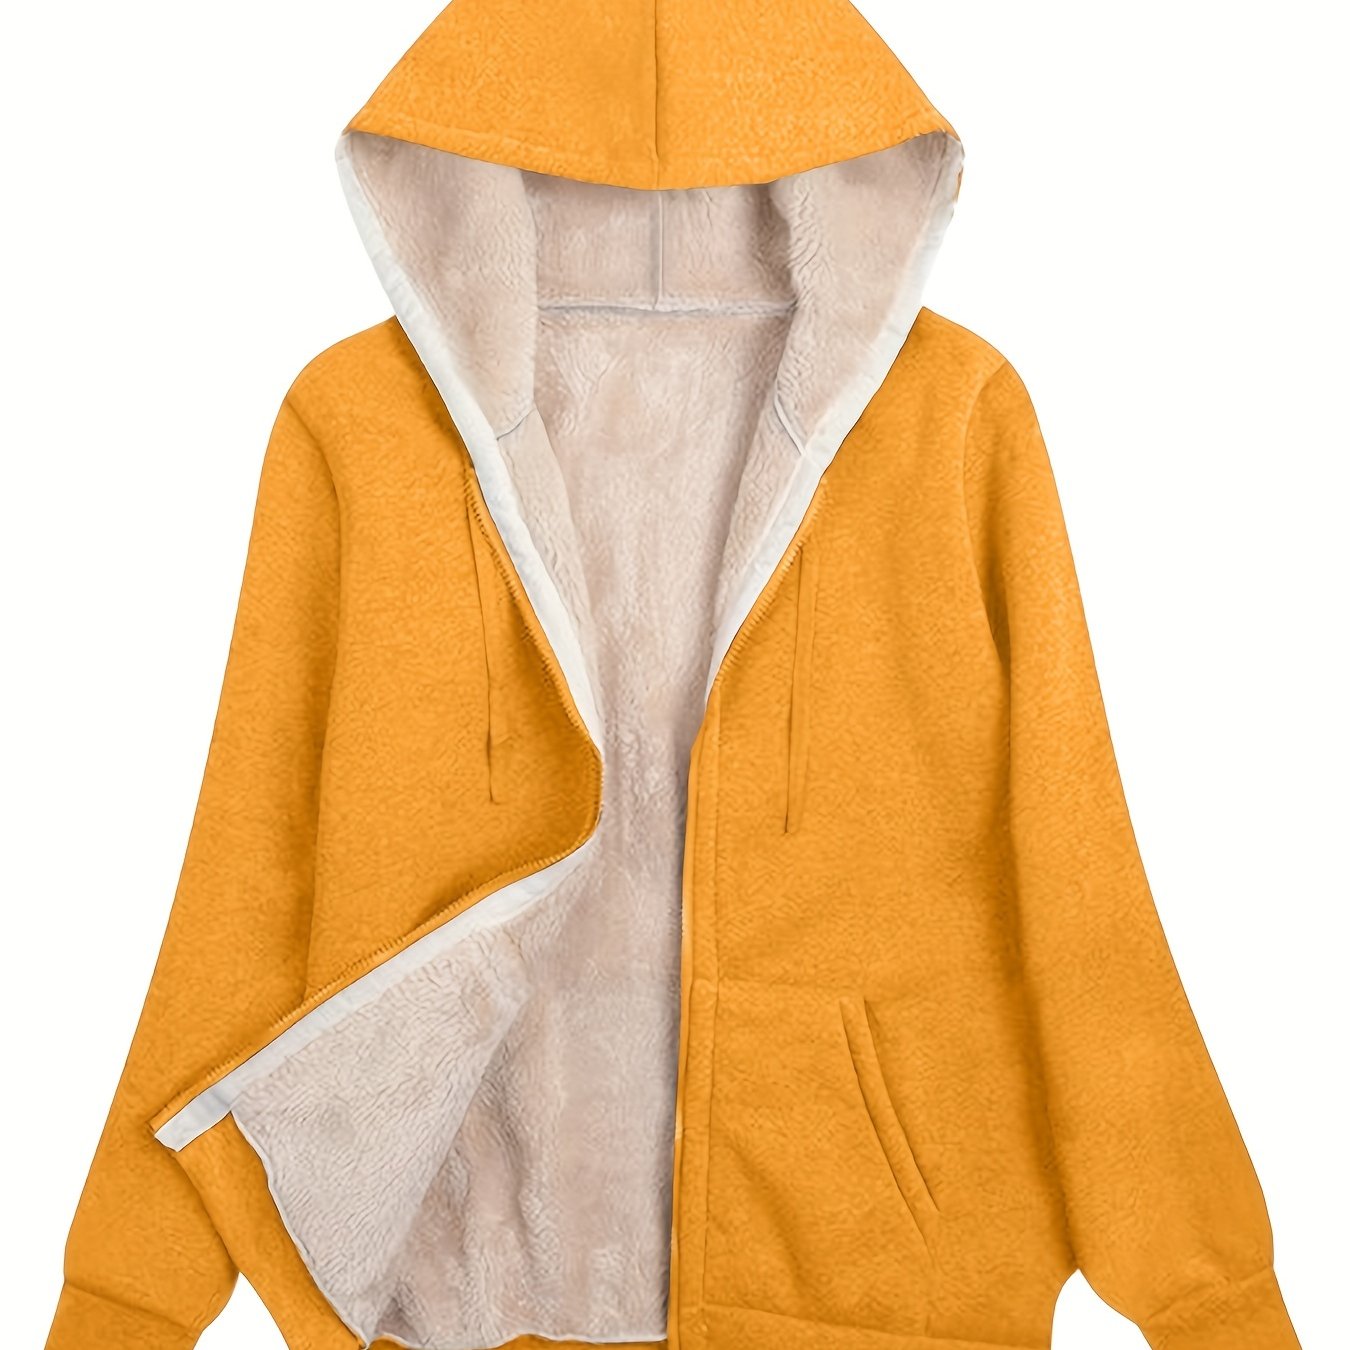 XFLWAM Womens Striped Zip Up Hoodies Casual Long Sleeve Drawstring Coats  Oversized Hooded Sweatshirts Jackets with Pockets Orange L 